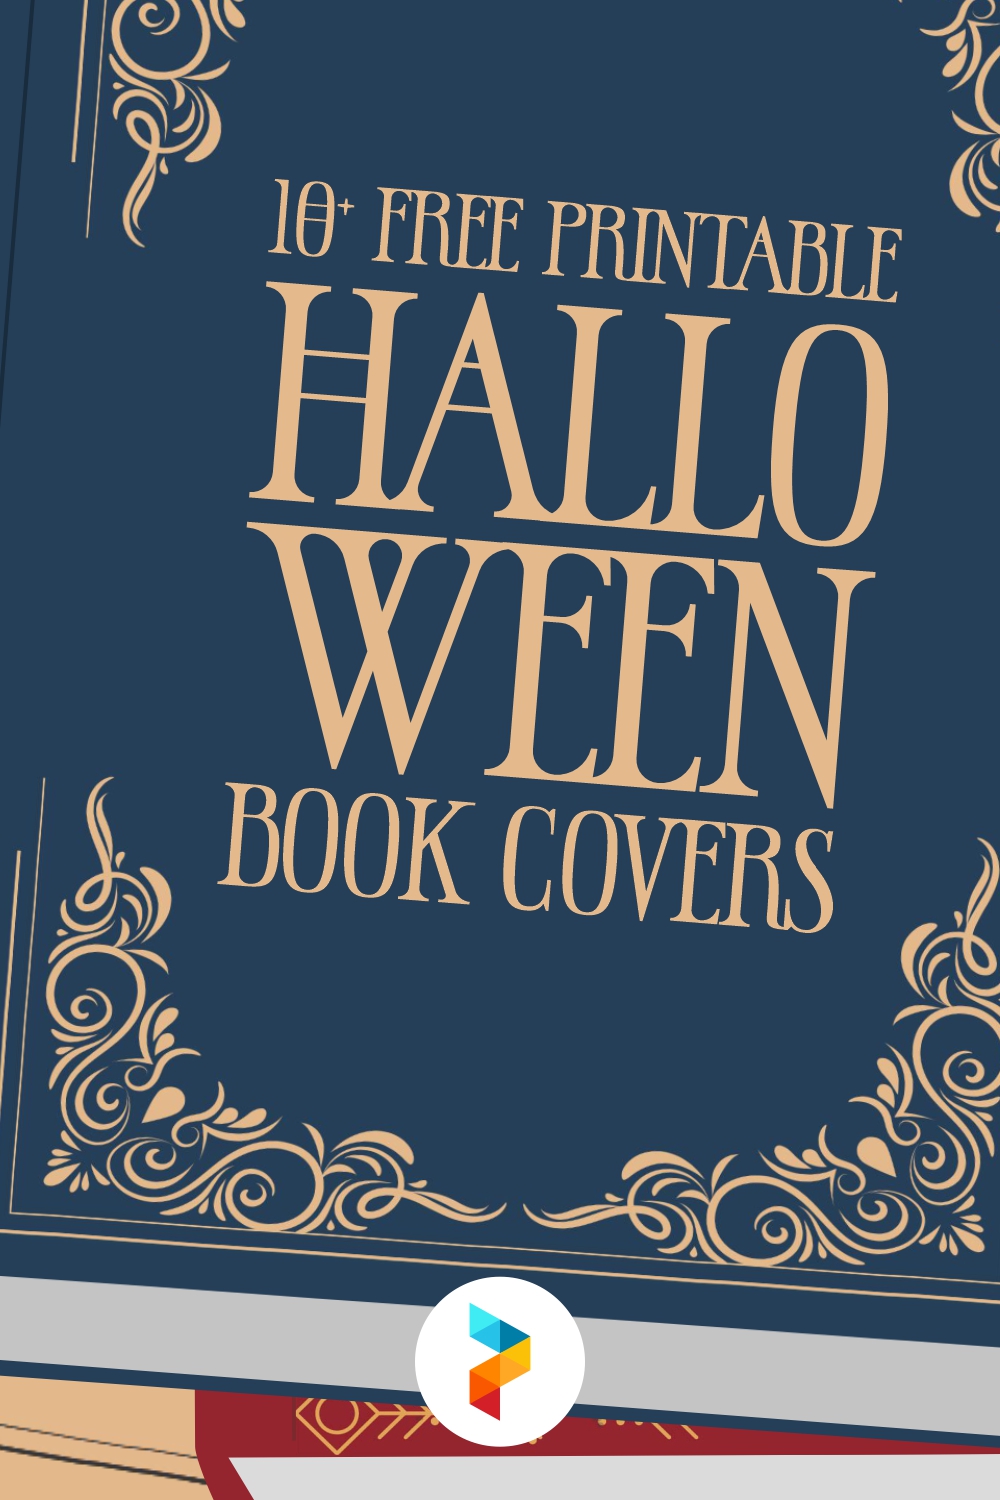 Printable Halloween Book Covers